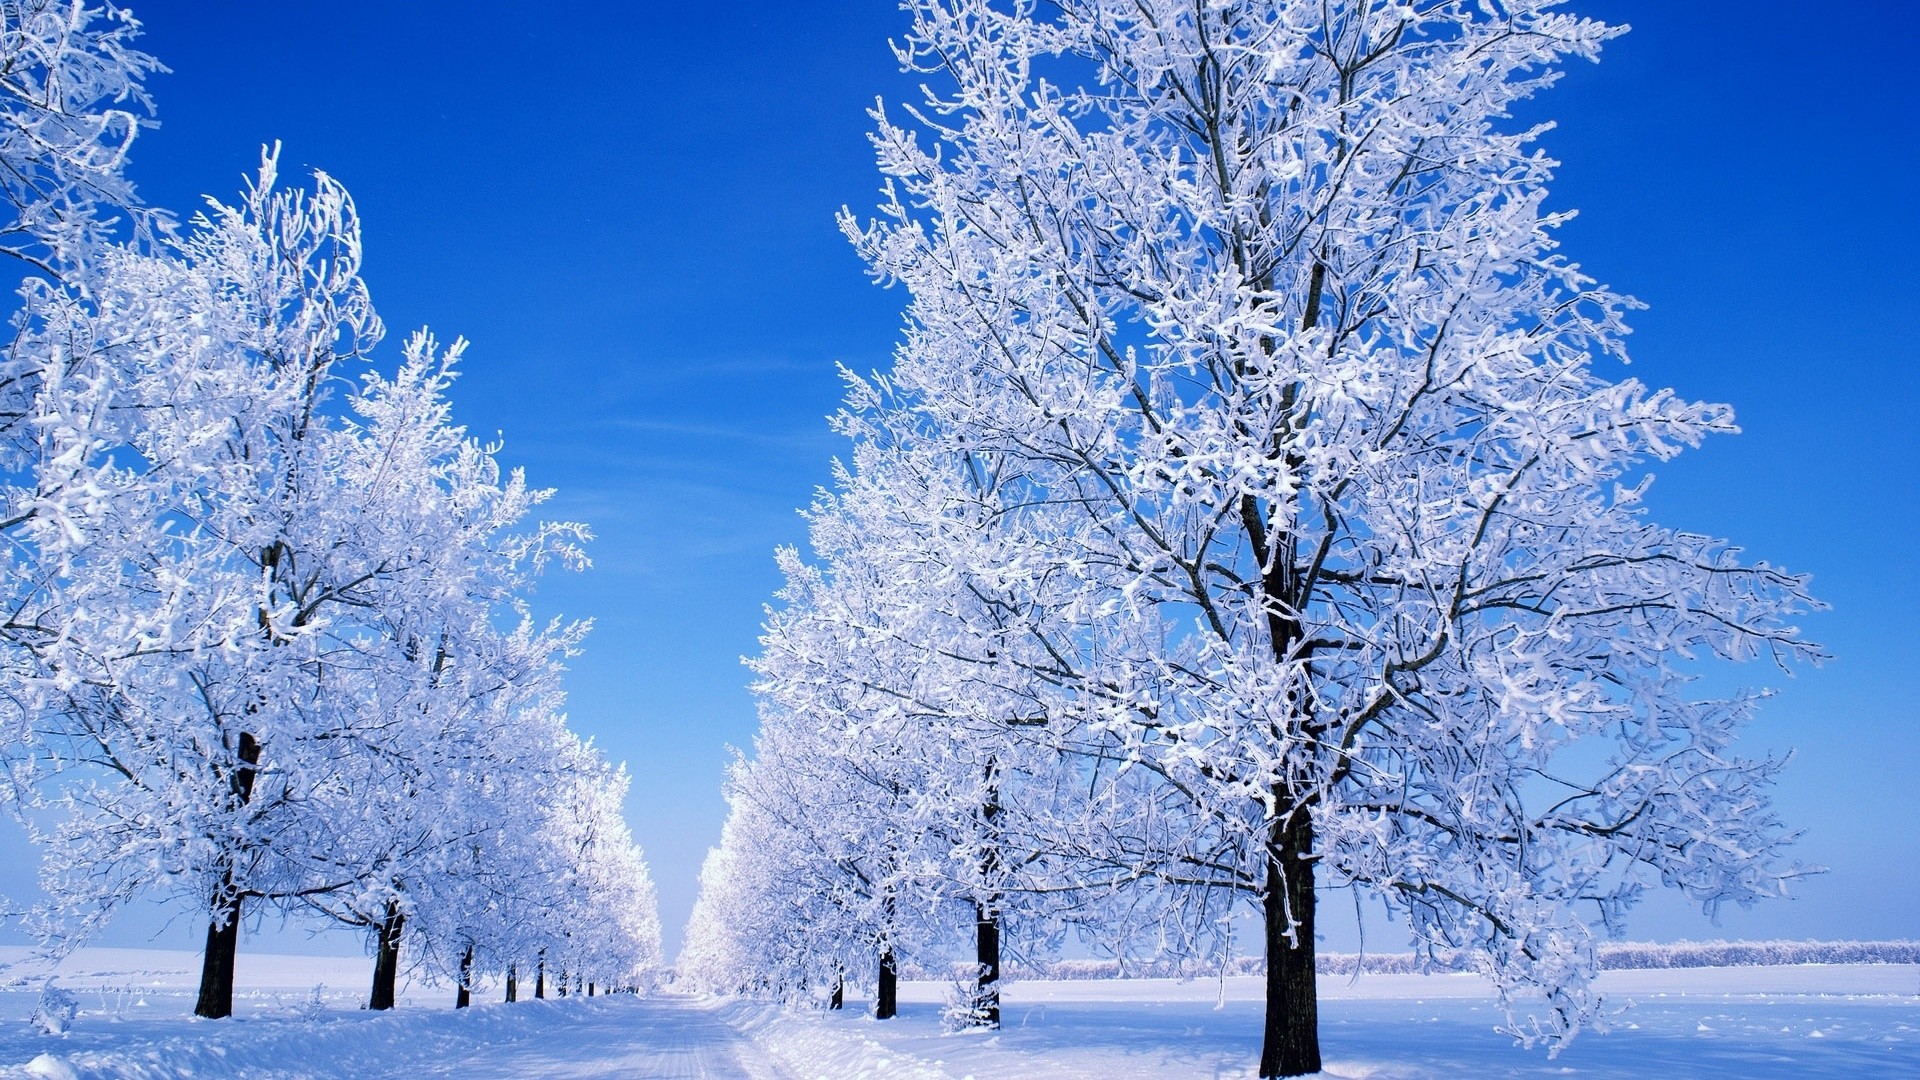 Christmas Scene Desktop Wallpaper - High Resolution Snowy Trees - HD Wallpaper 